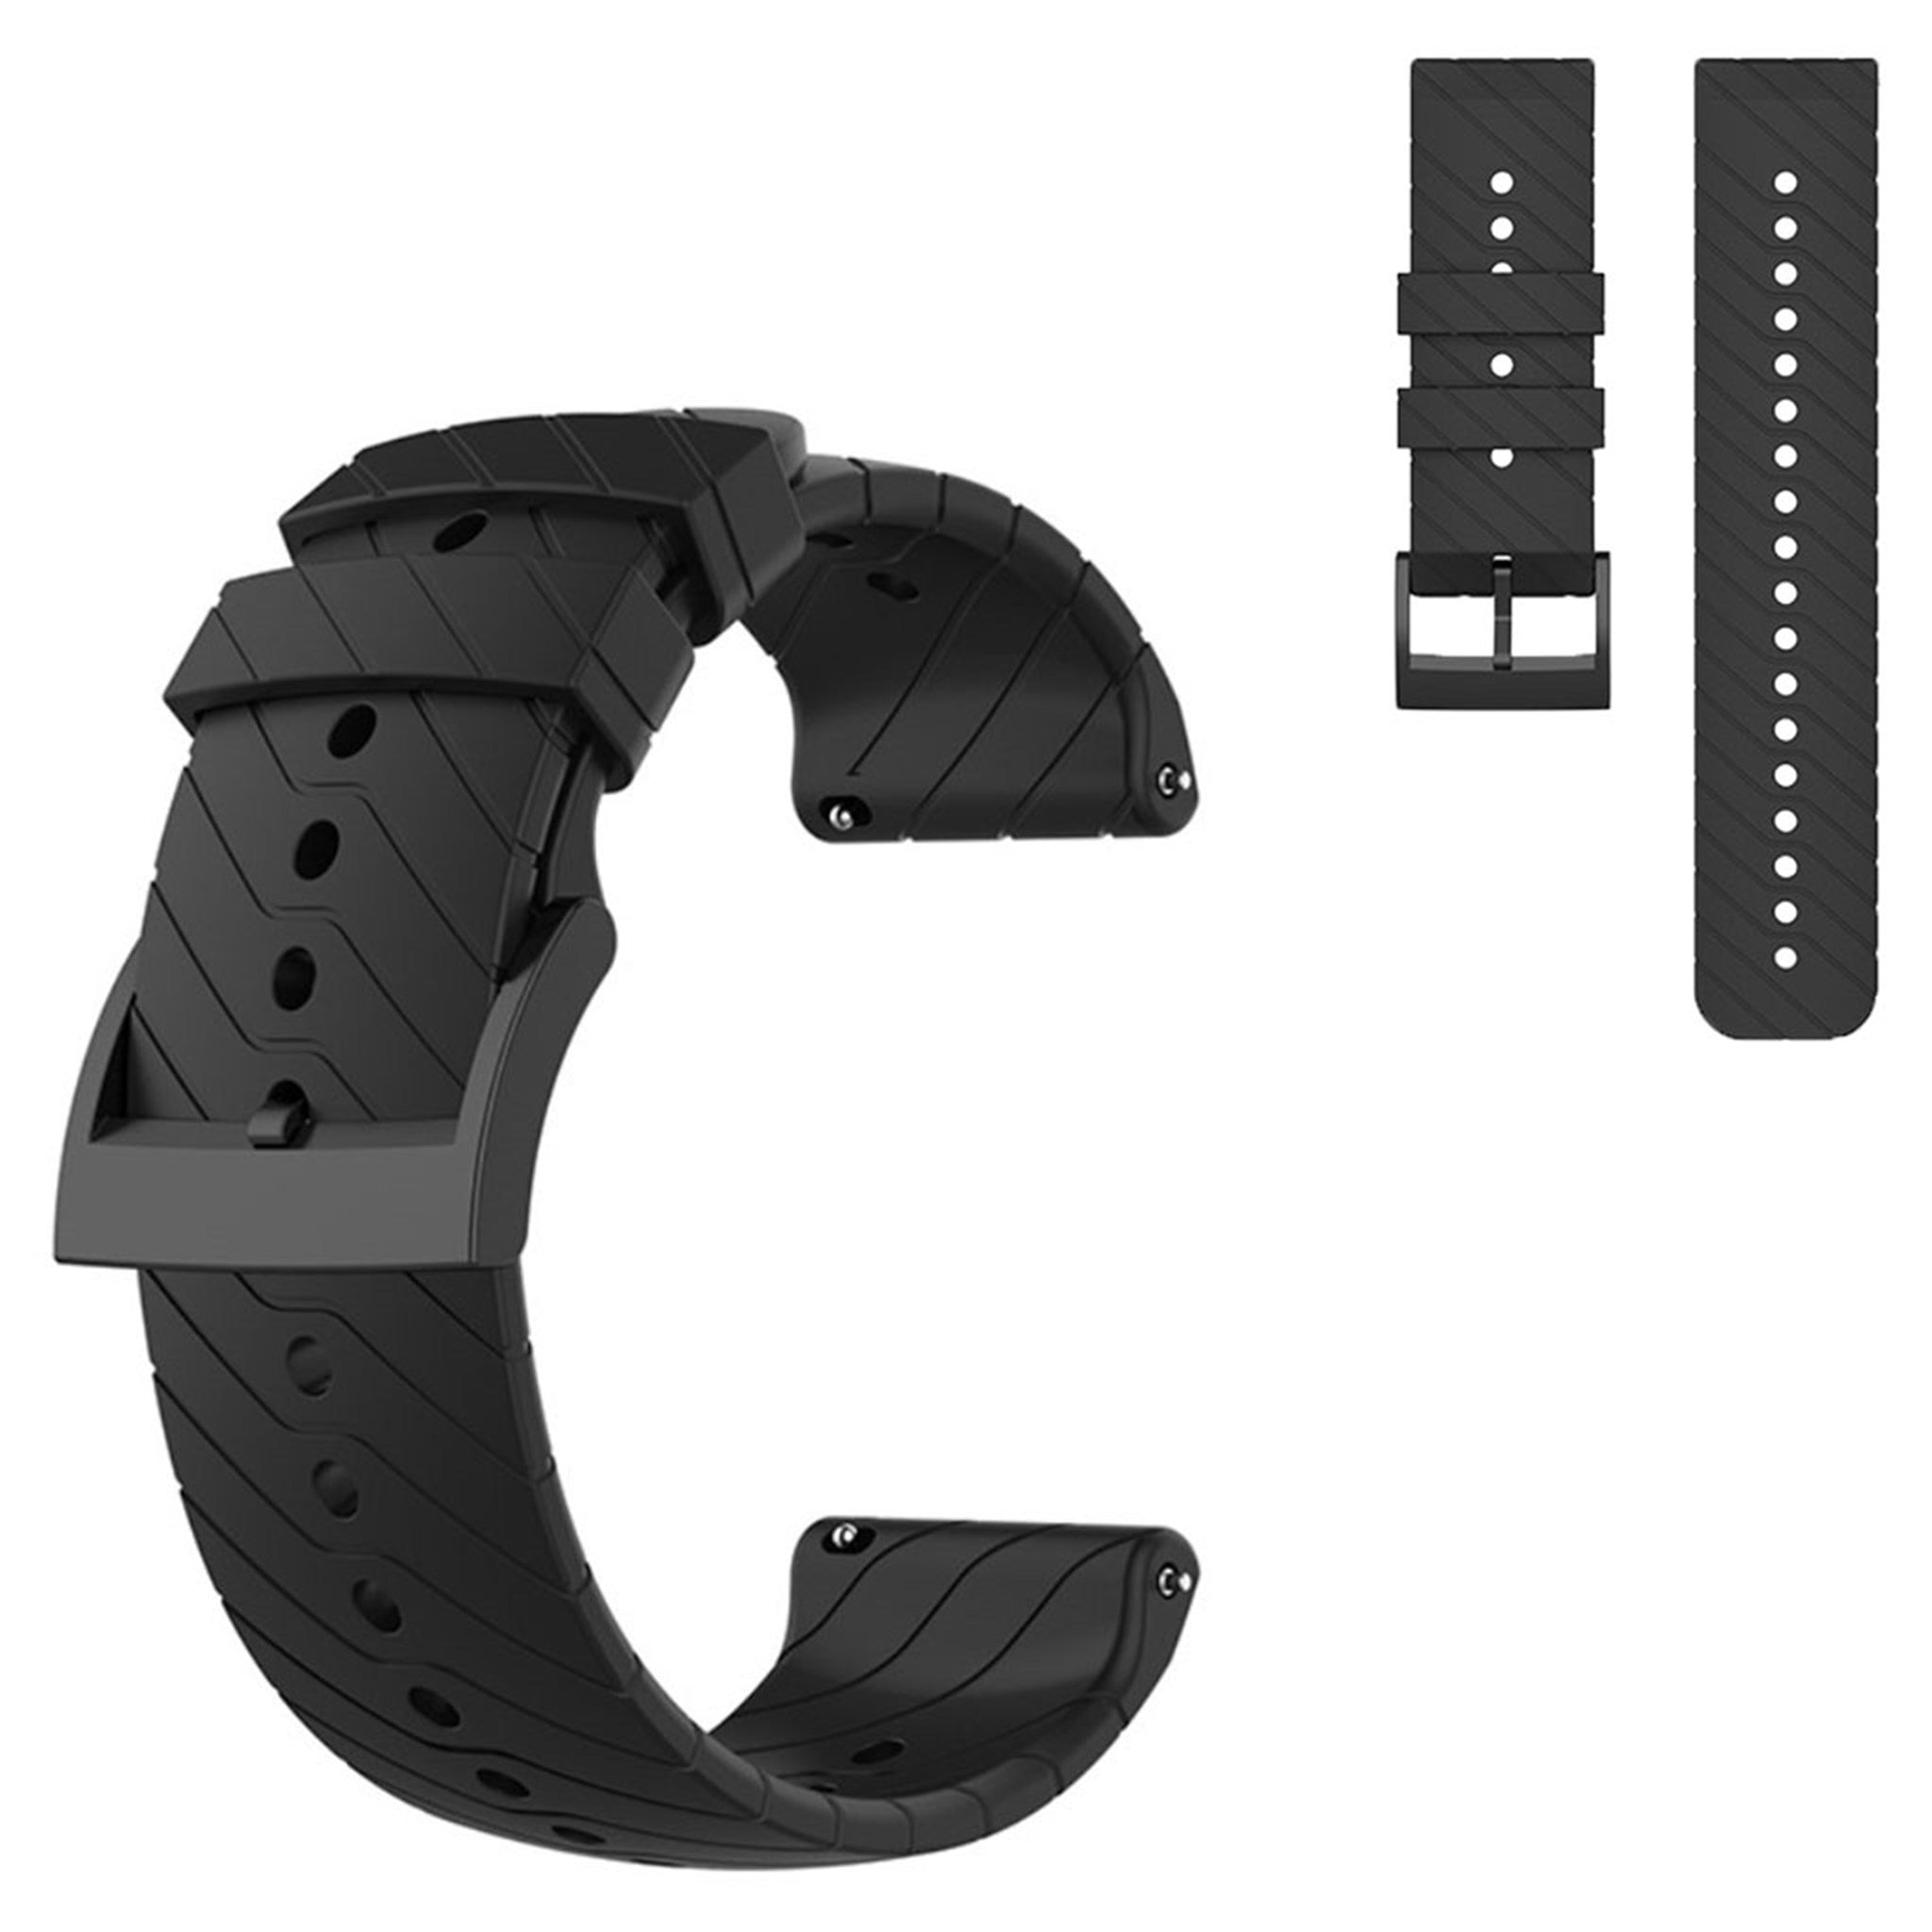 24mm twill texture silicone watch strap for Suunto device - Black